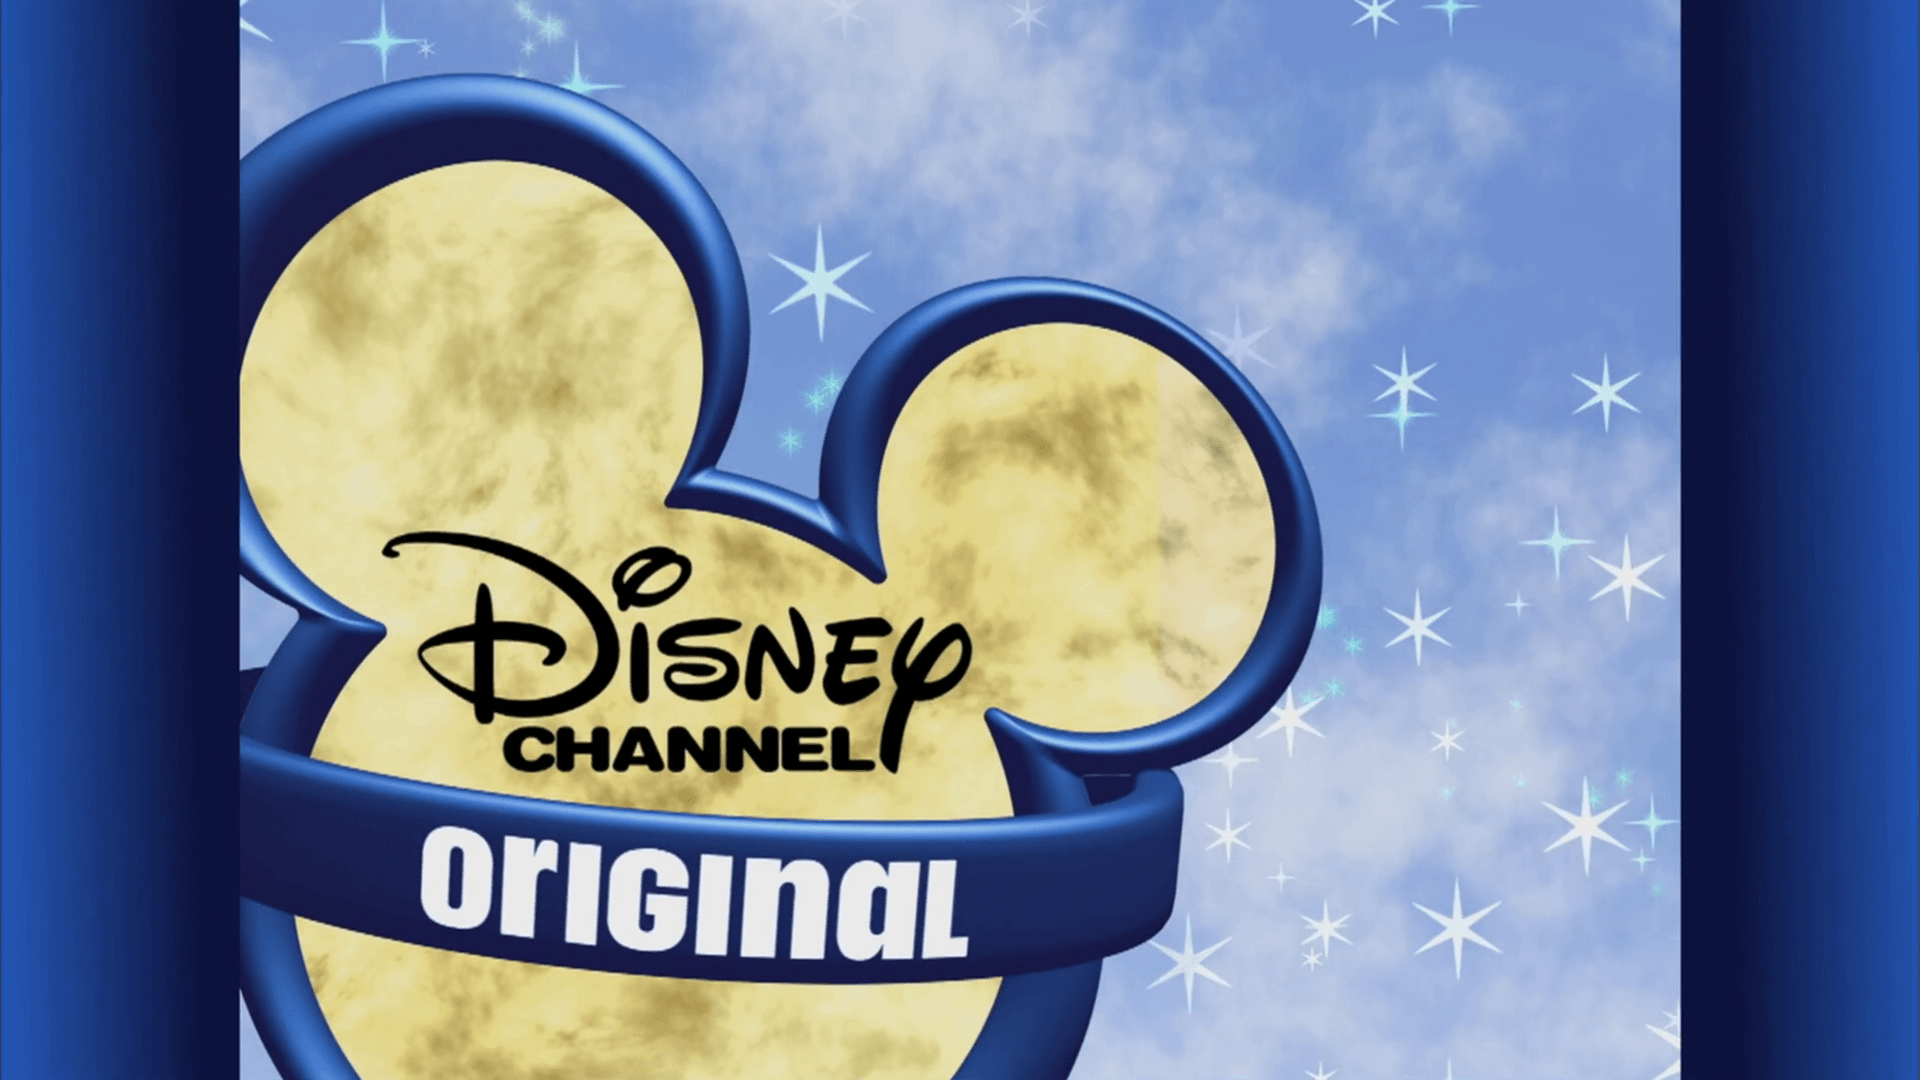 Disney Channel Original Logo - Image - Disney Channel Original 2007.png | Logopedia | FANDOM ...